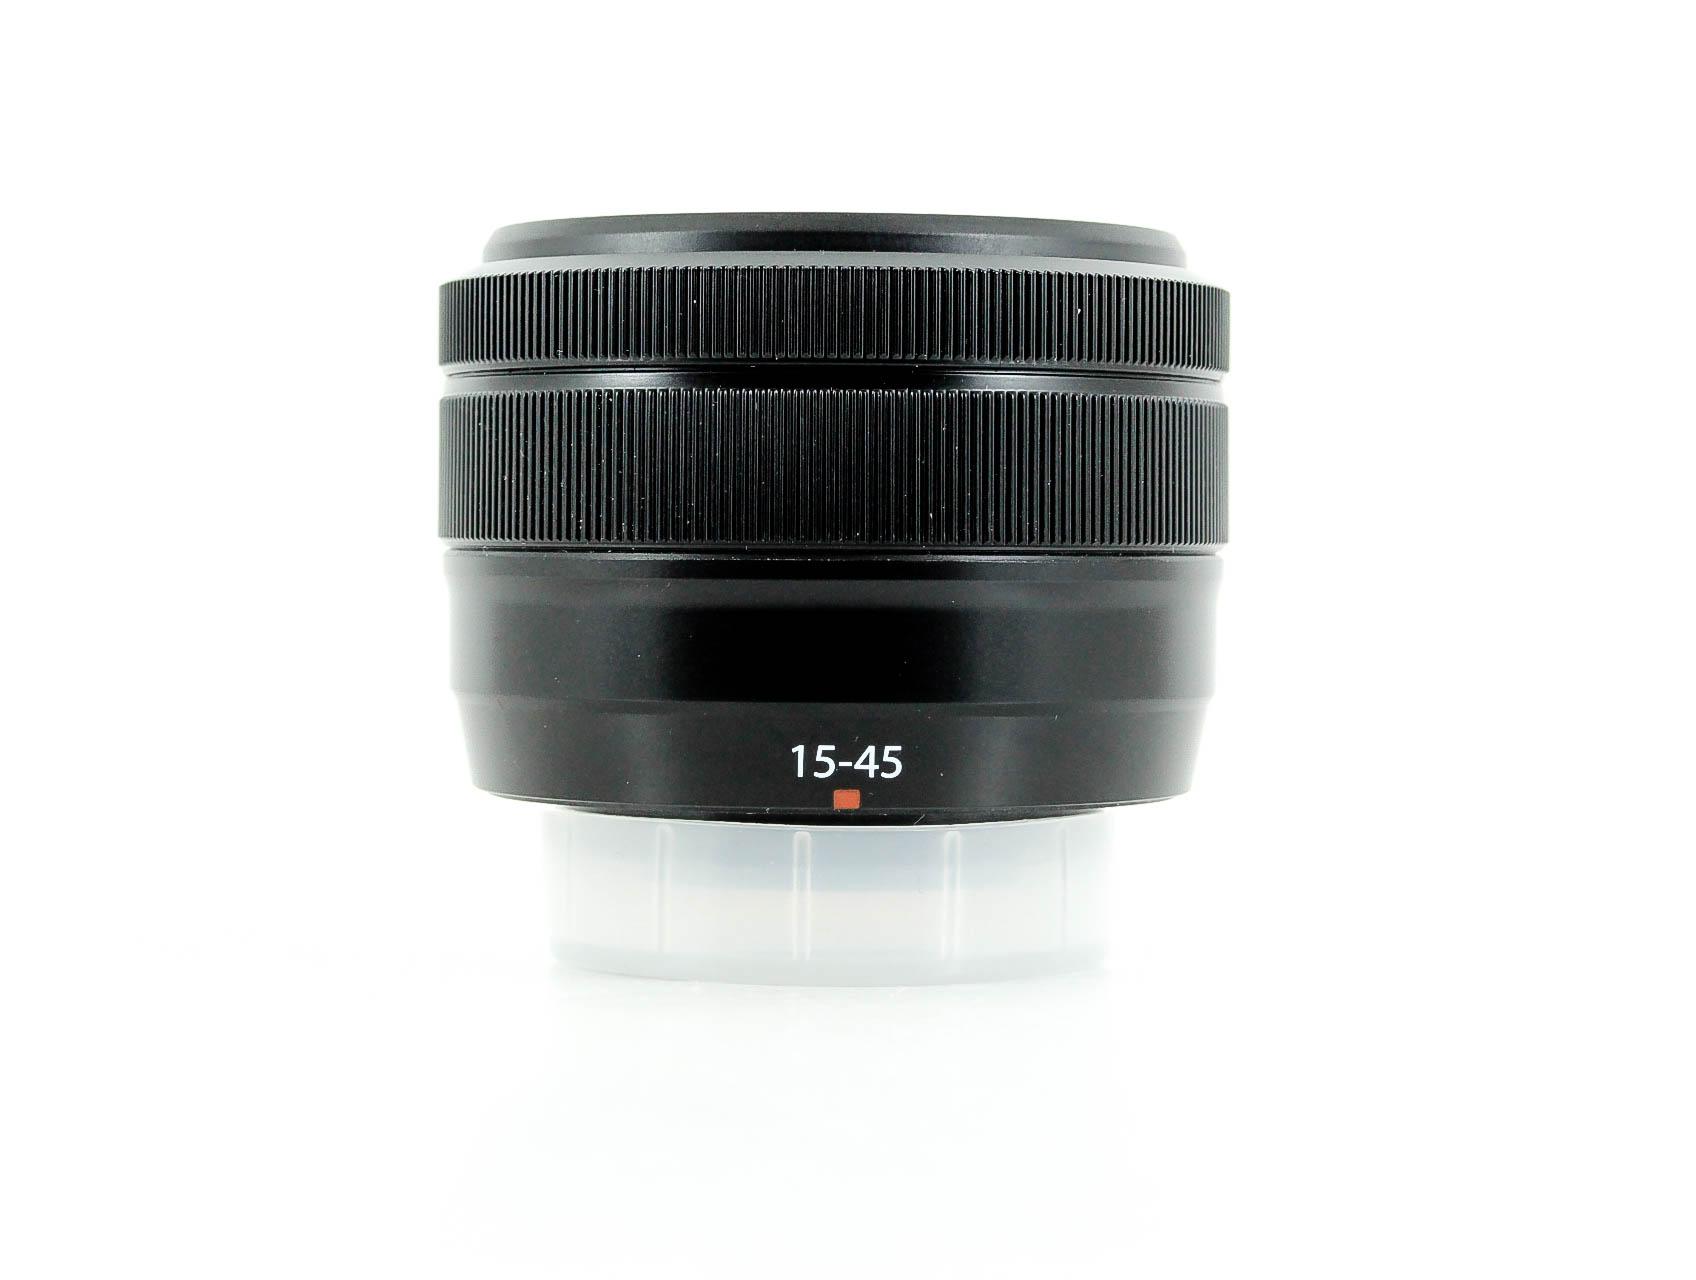 Fujifilm XC 15-45mm f/3.5-5.6 OIS PZ Lens Lenses and Cameras